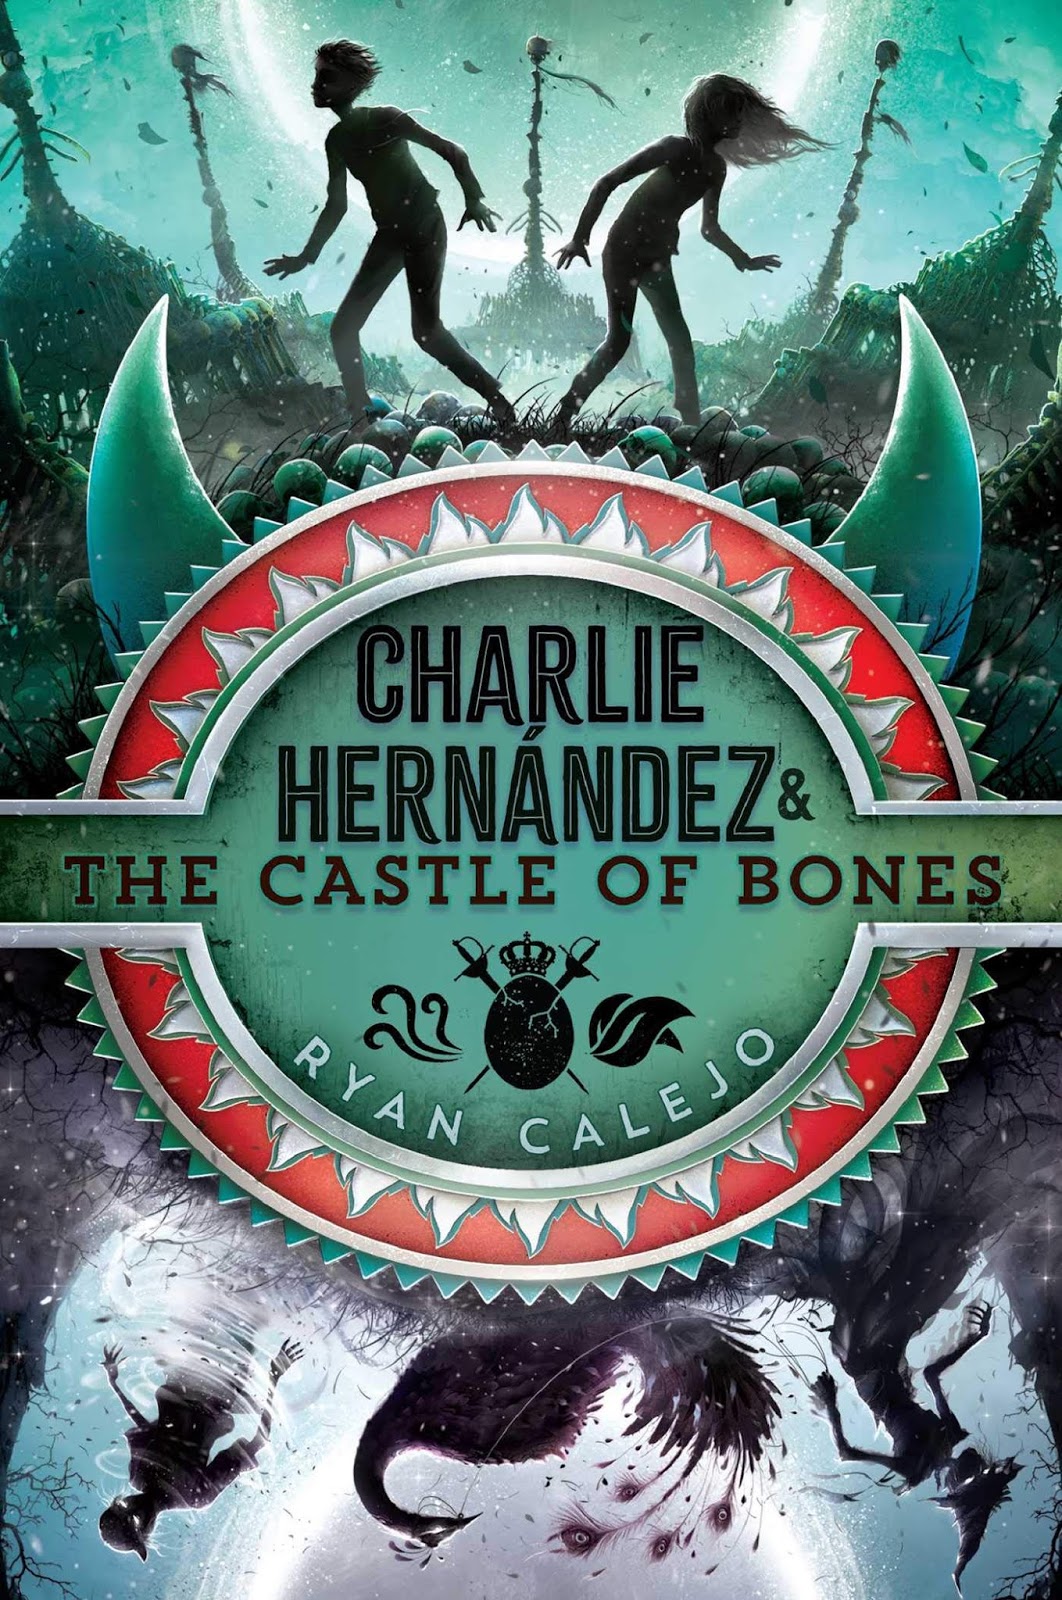 Charlie Hernandez & The Castle of Bones by Ryan Calejo Blog Tour ...